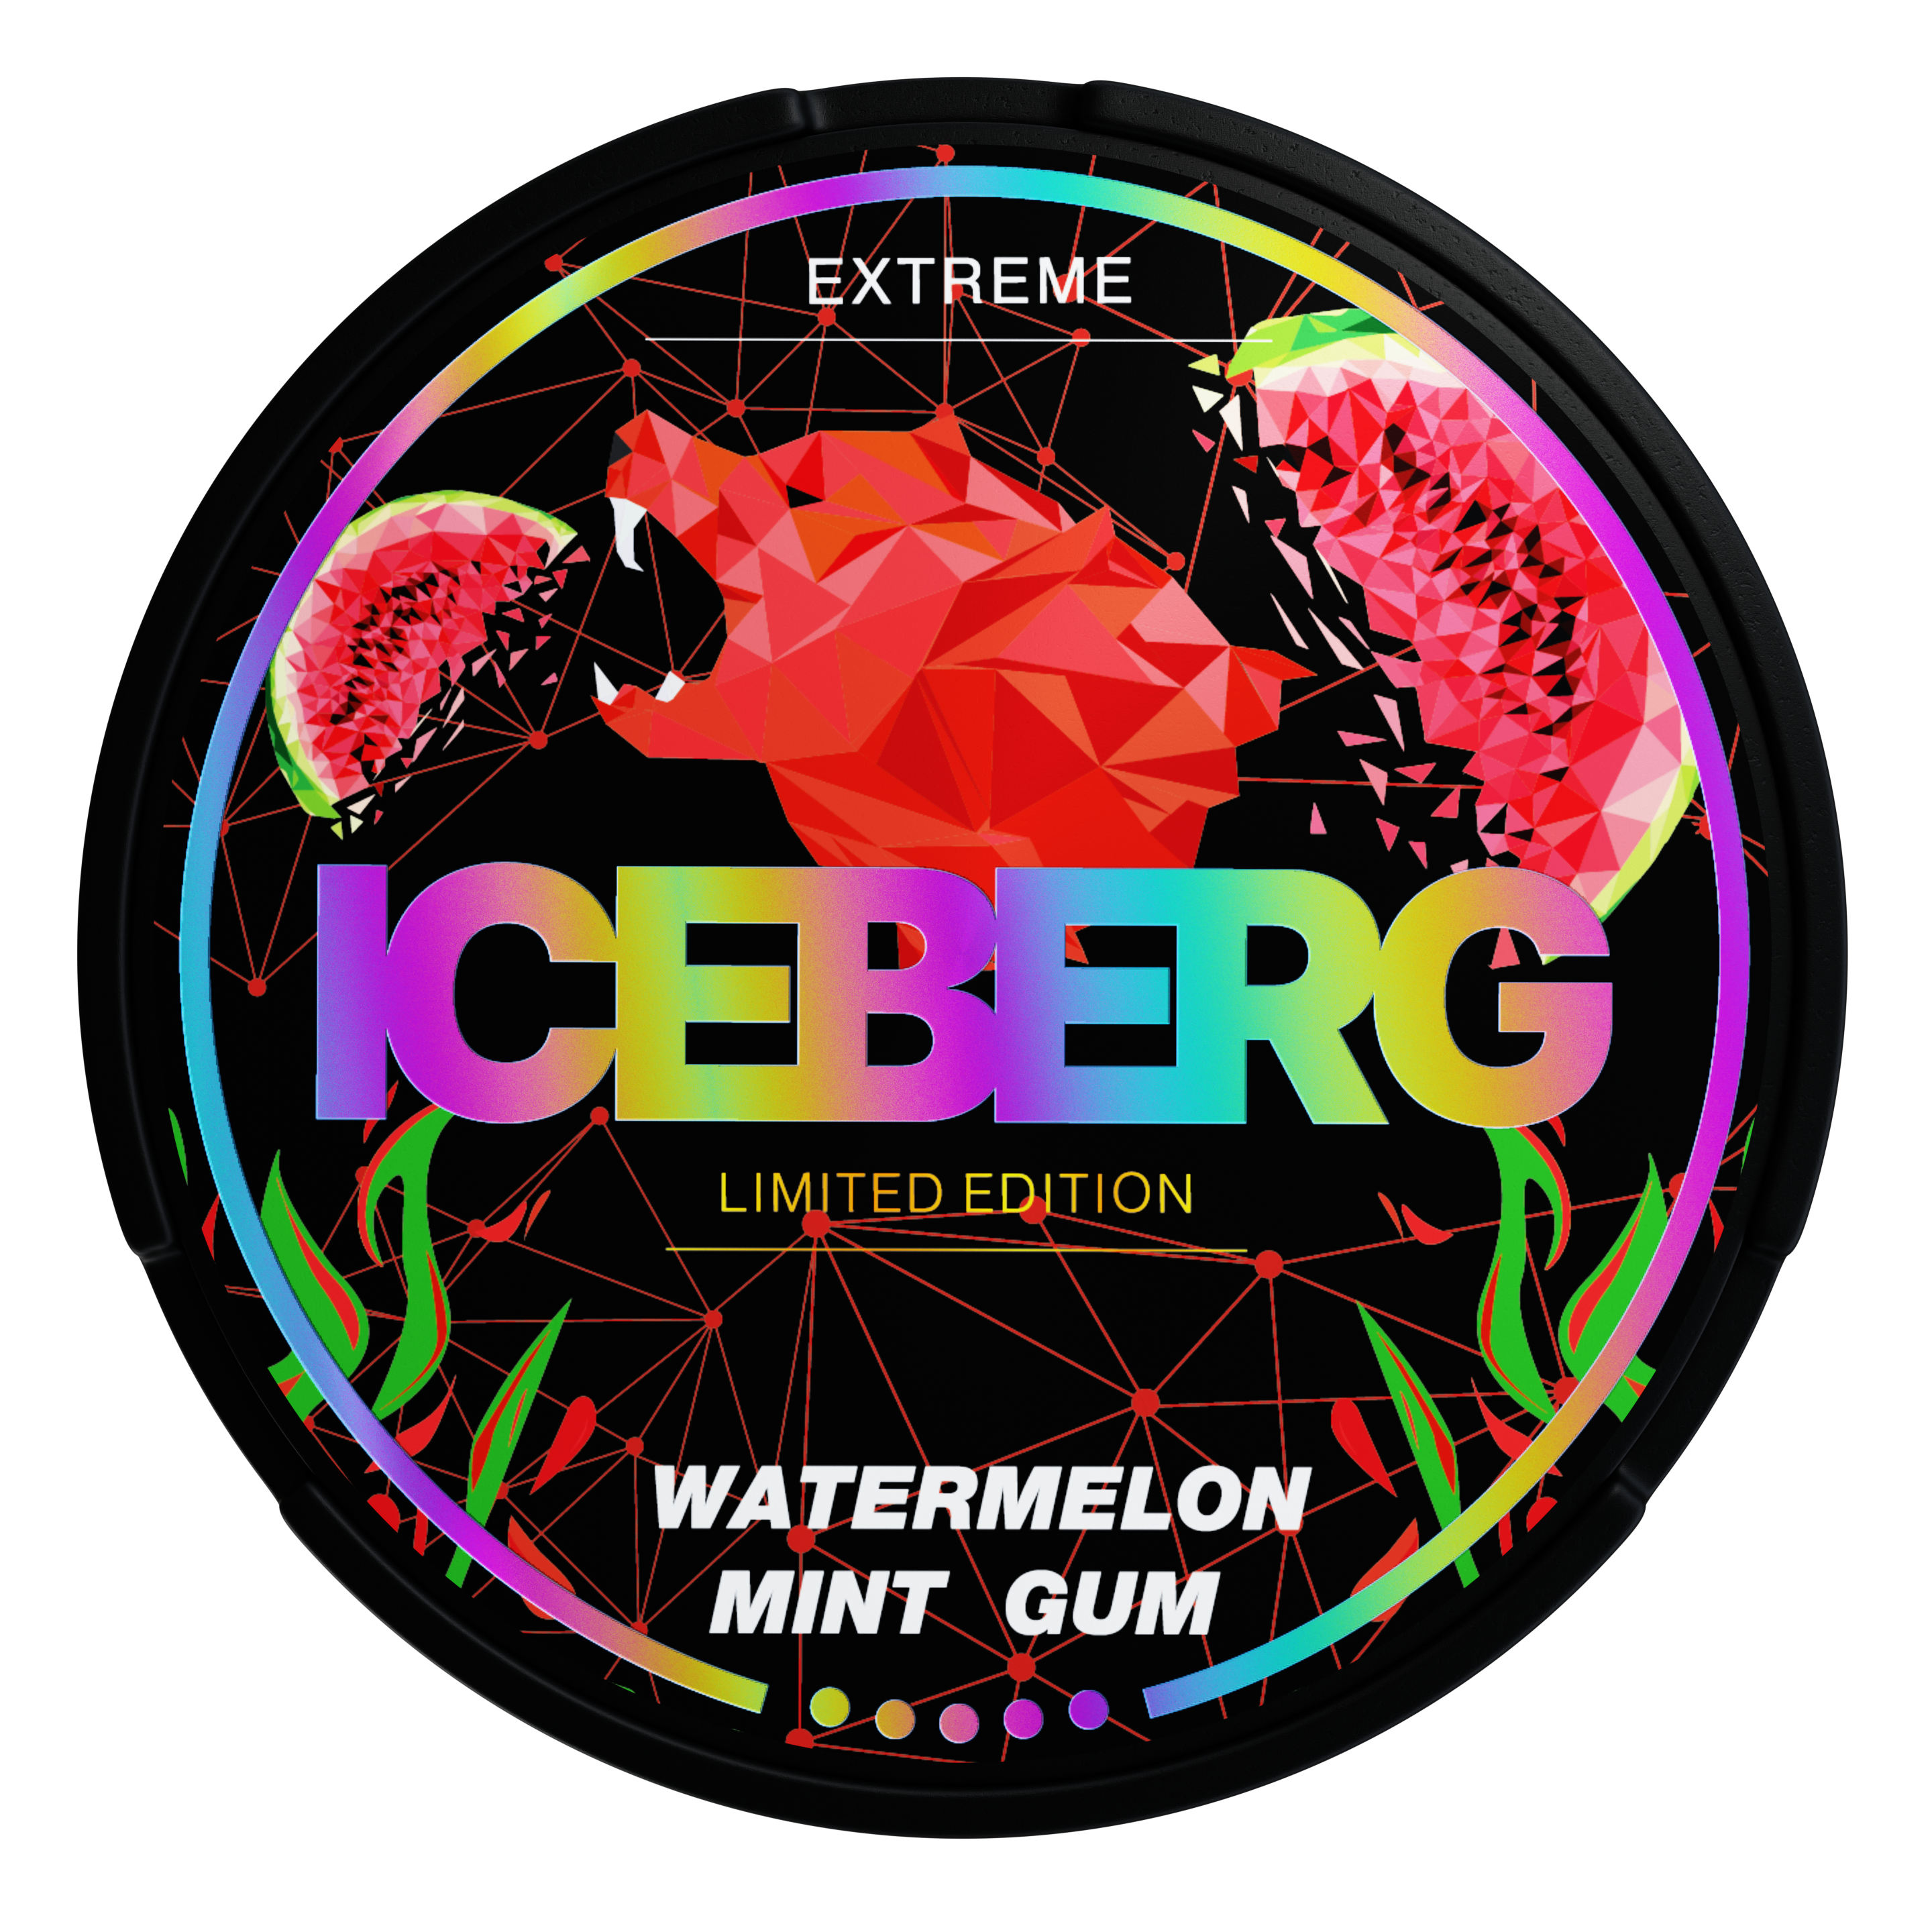 ICEBERG Watermelon Mint Gum